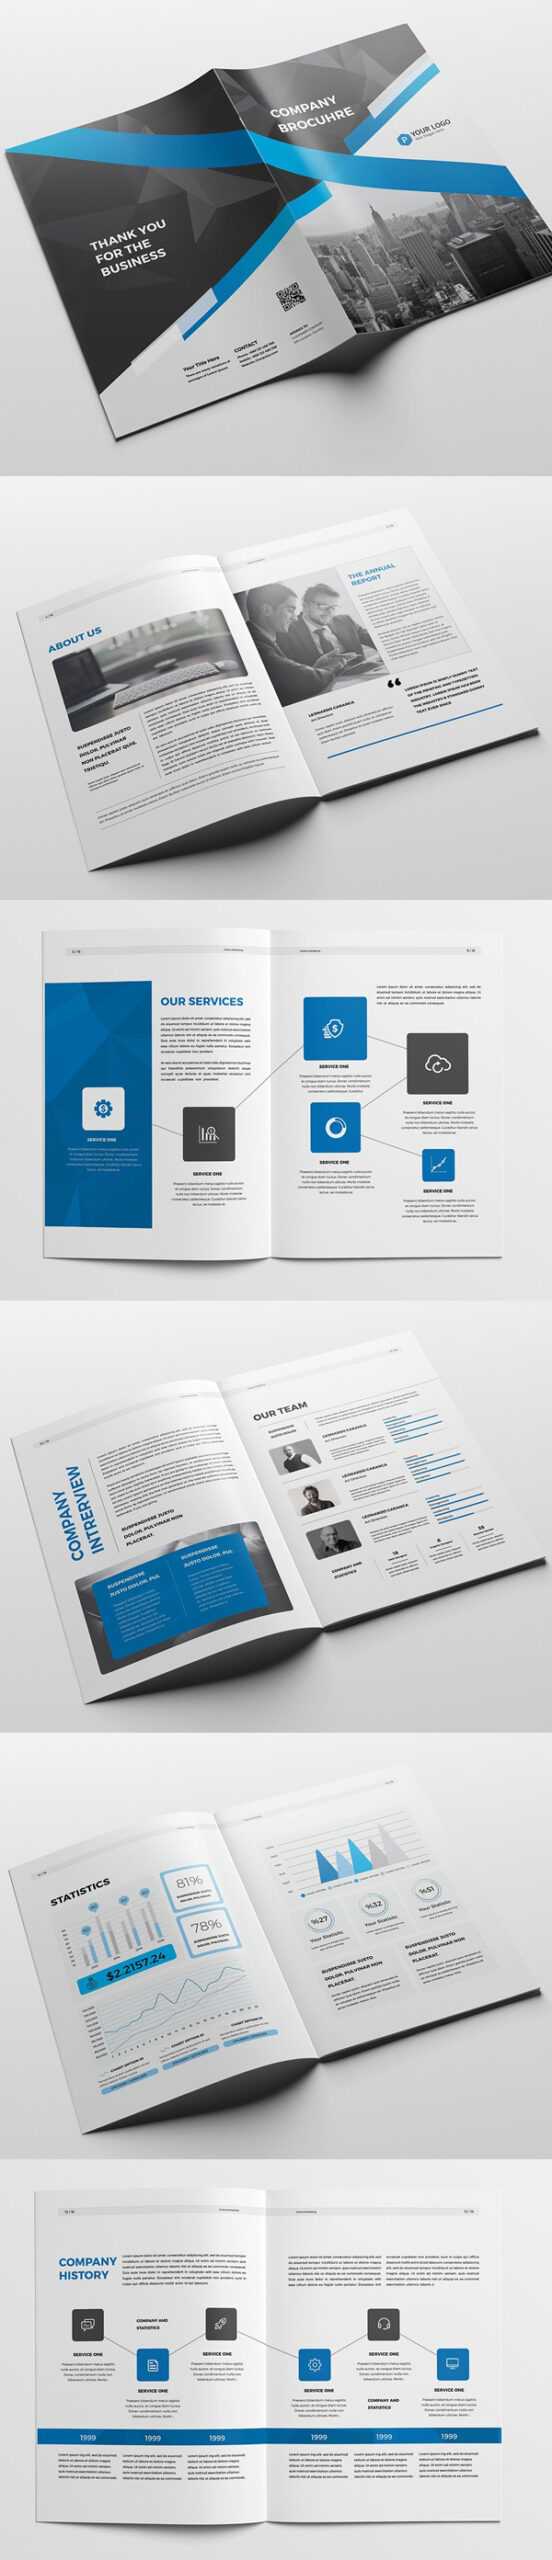 Best Business Brochure Templates | Design | Graphic Design With Regard To Cleaning Brochure Templates Free